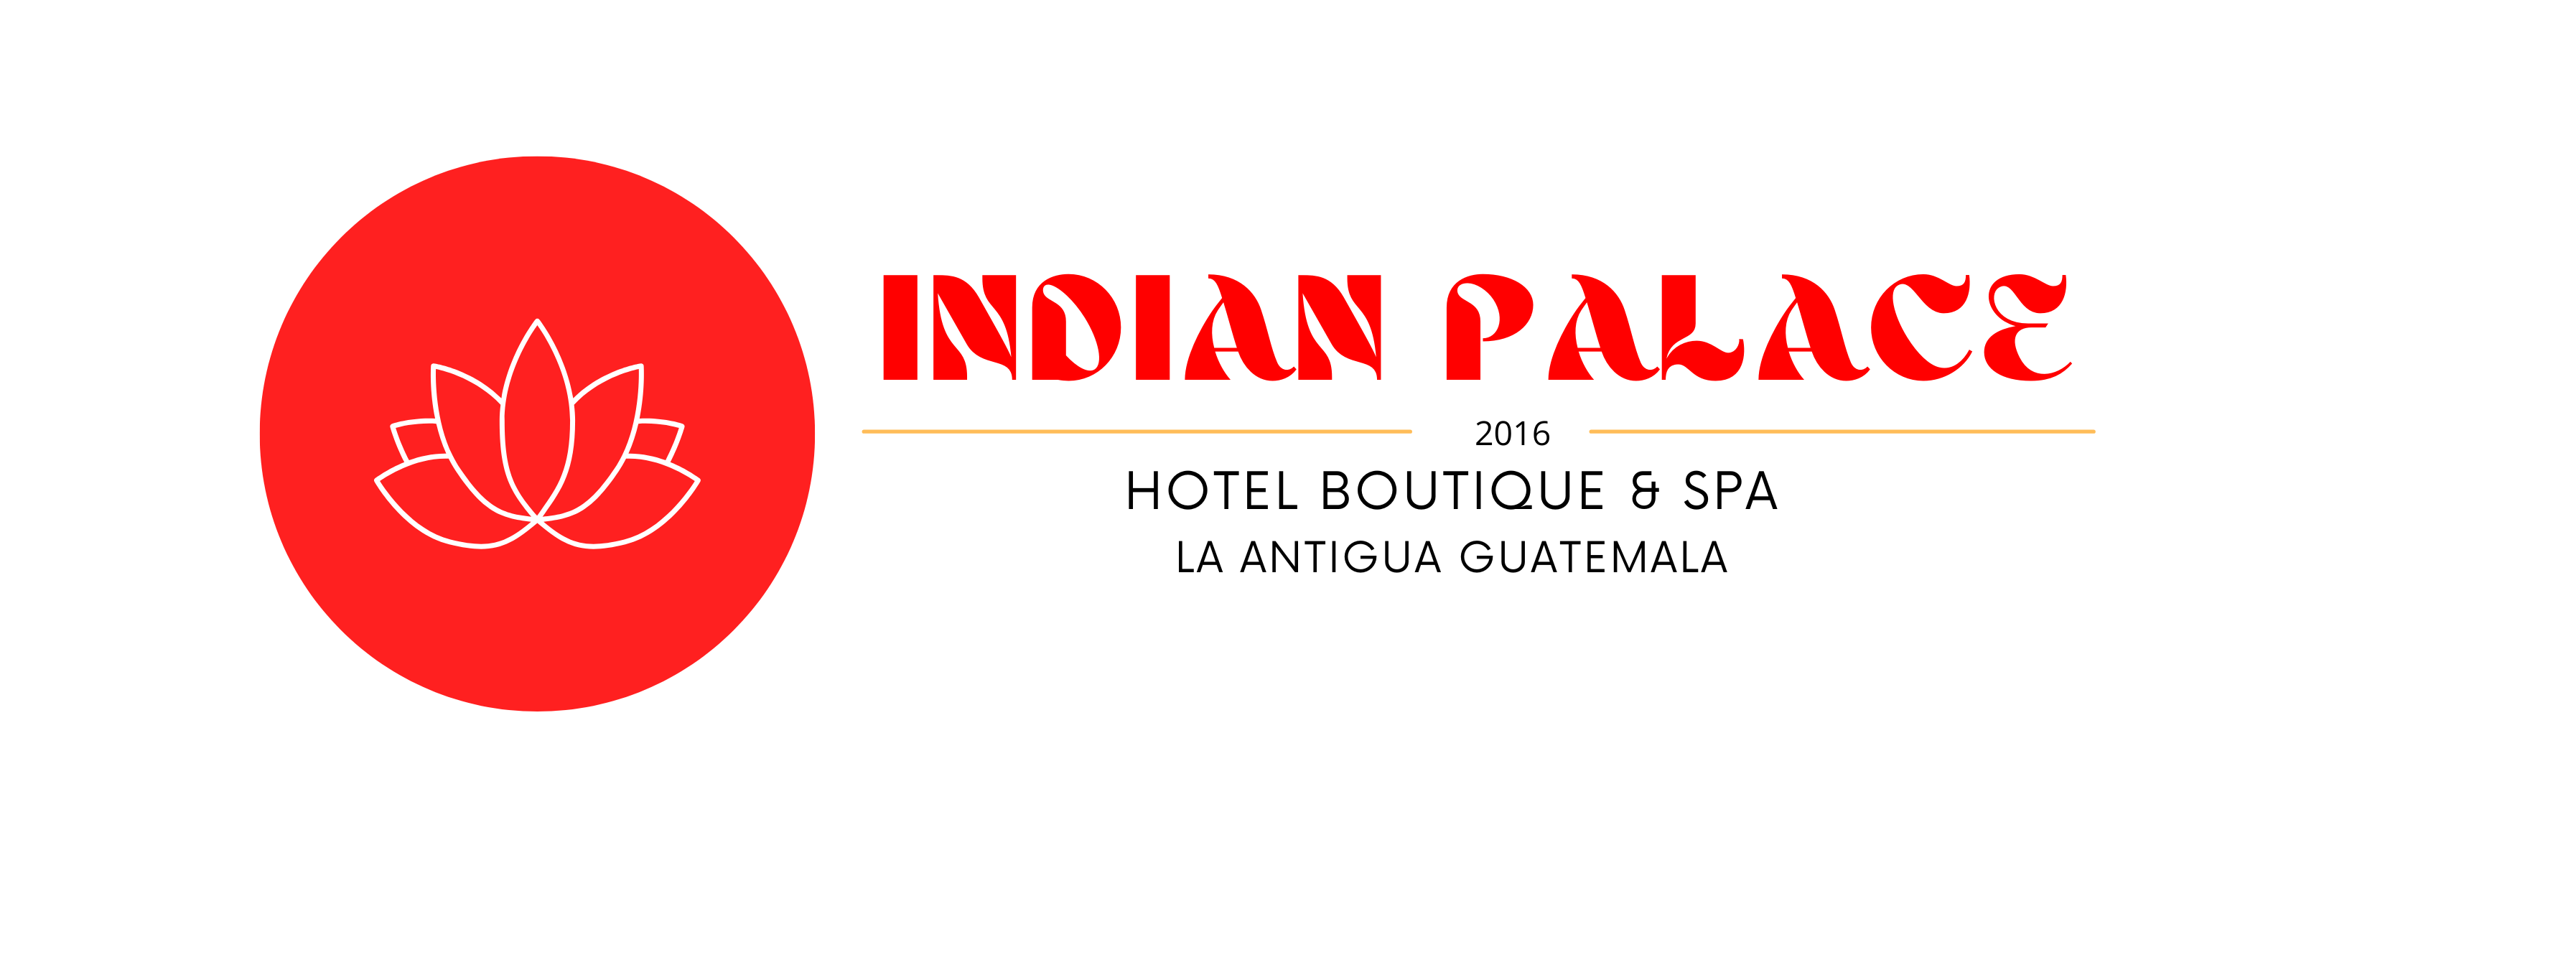 15% de descuento en Suits en Indian Palace Hotel